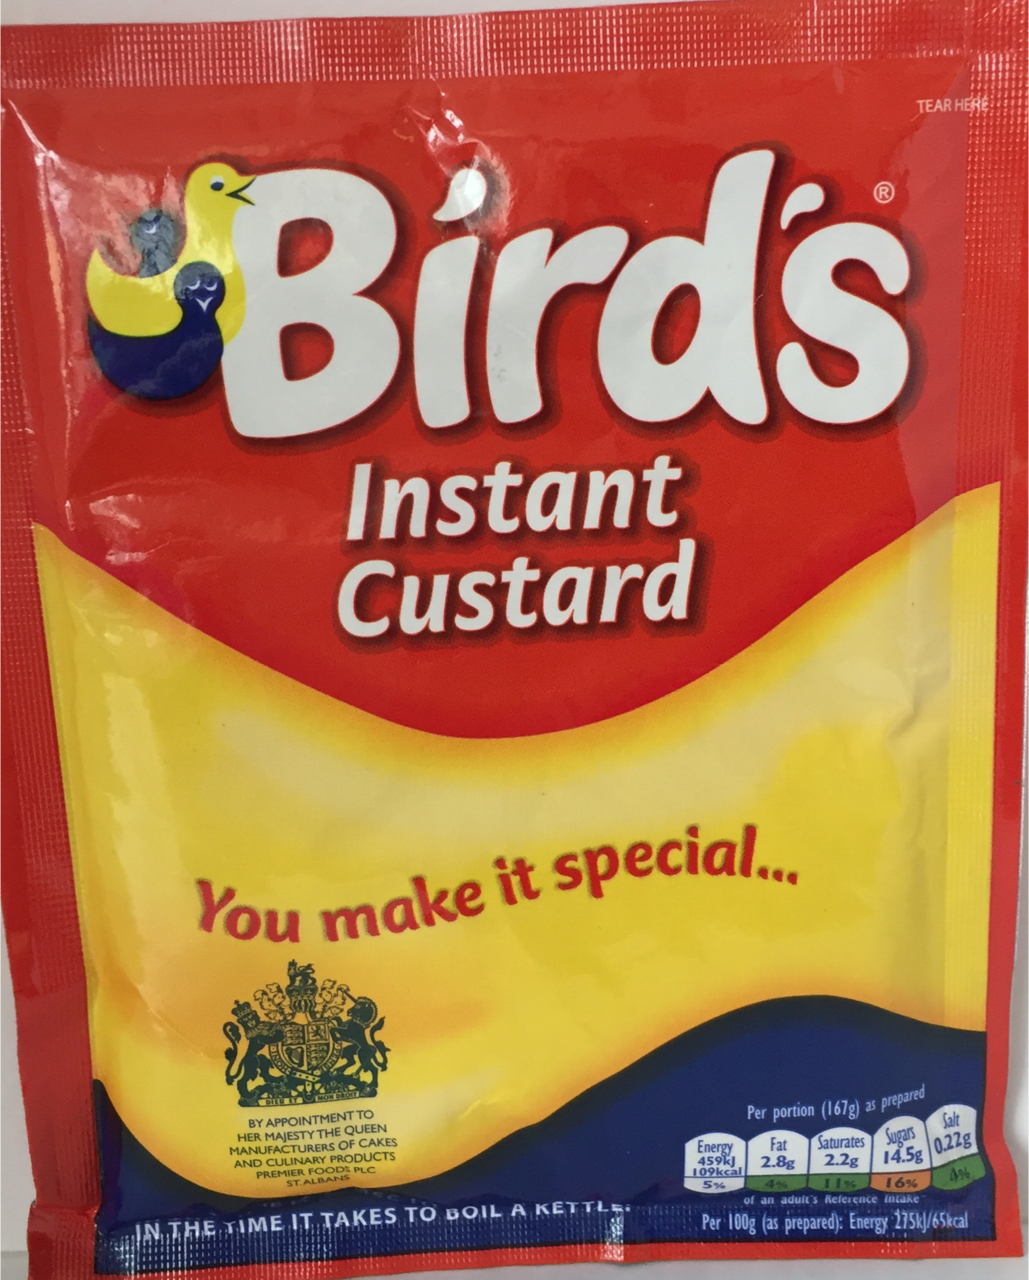 Birds Custard Instant Instant x 18